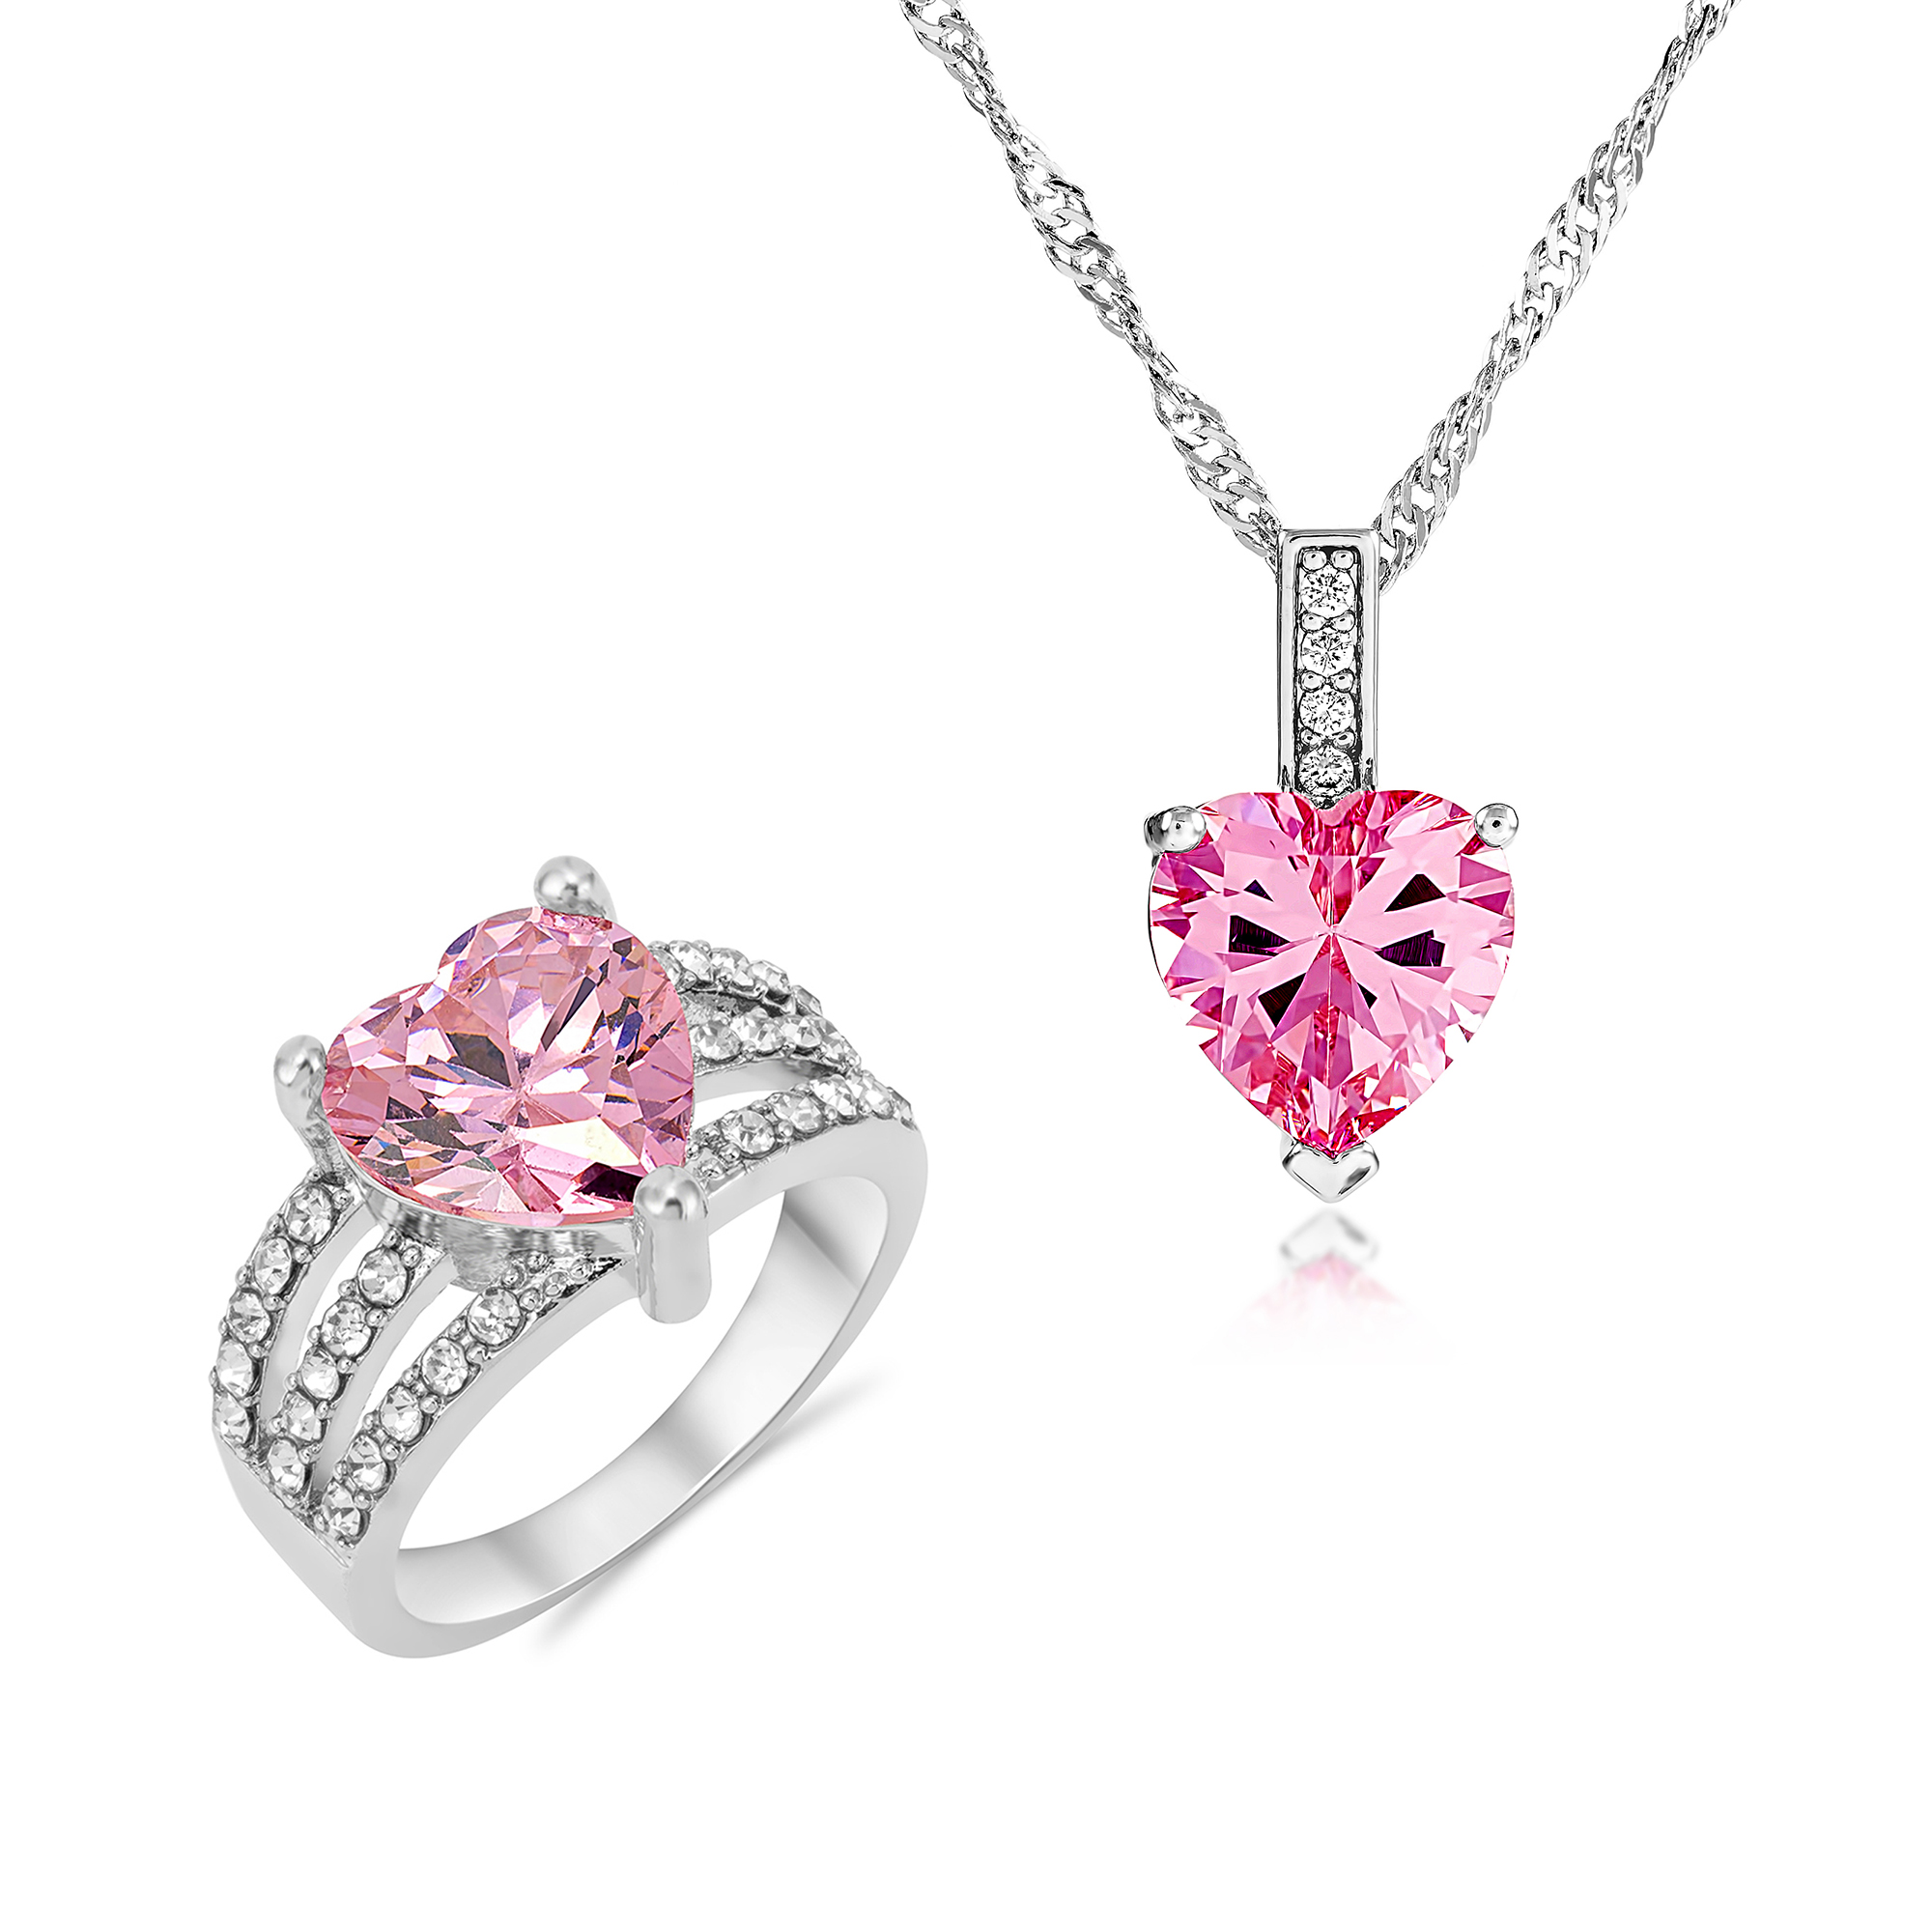 20 pcs - Pink Beautiful Simulated Crystal Elegant Pendant Heart-shaped Necklace and Ring Set - Random Ring Size - Total 10 Sets|GCJ010+GCJ024-Pink-Ran